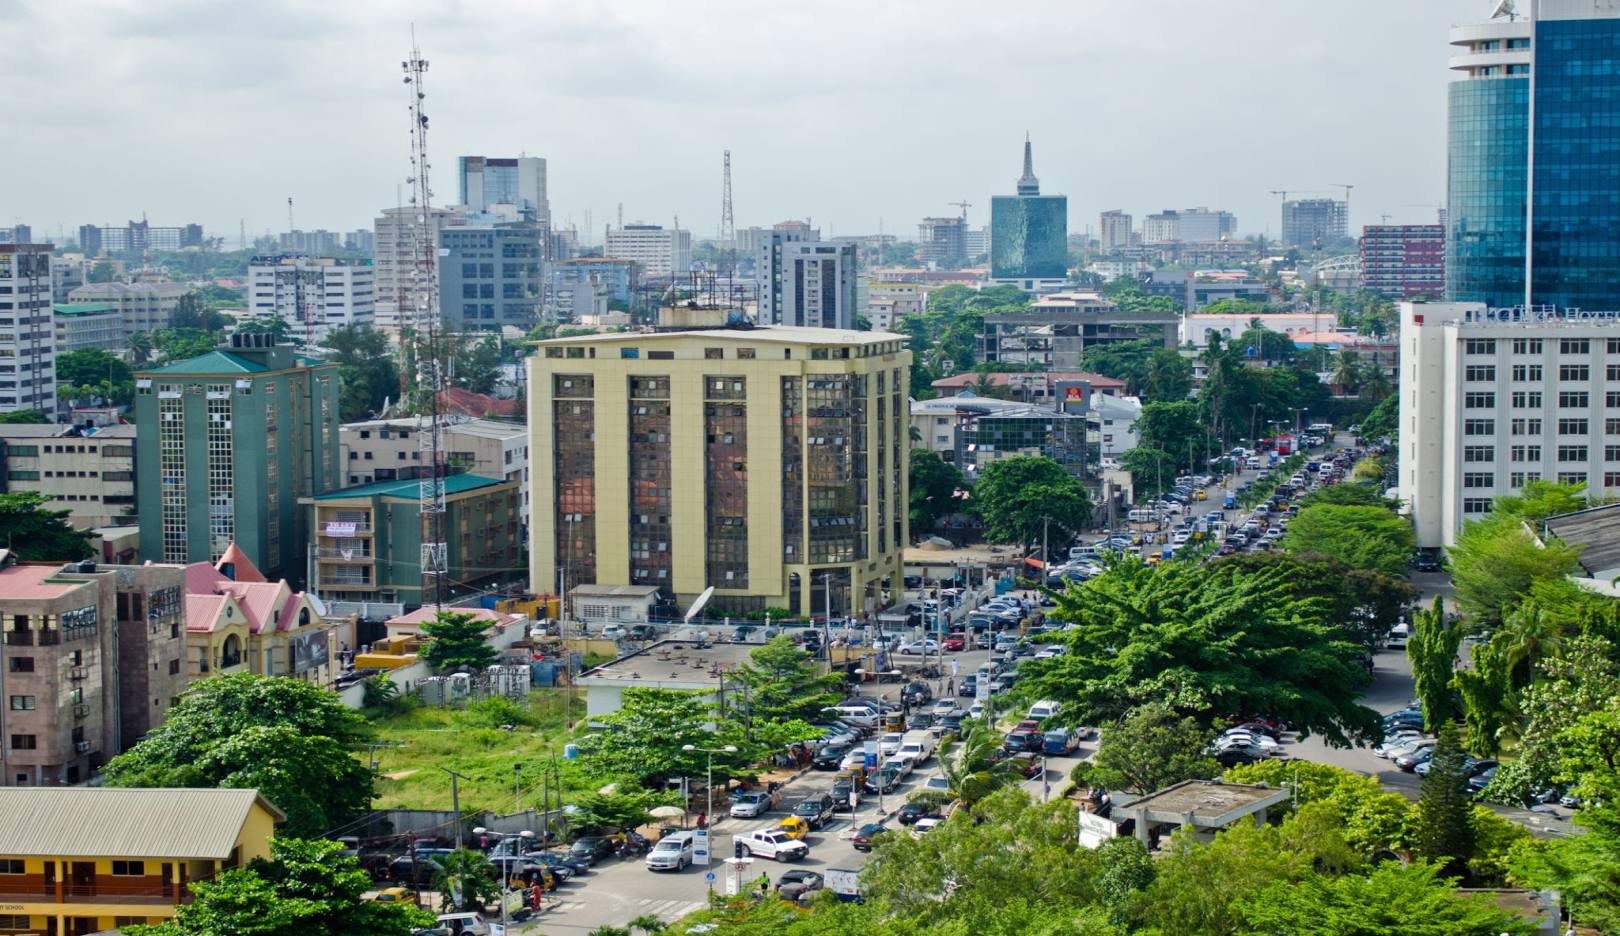 Lagos: The financial capital of Nigeria